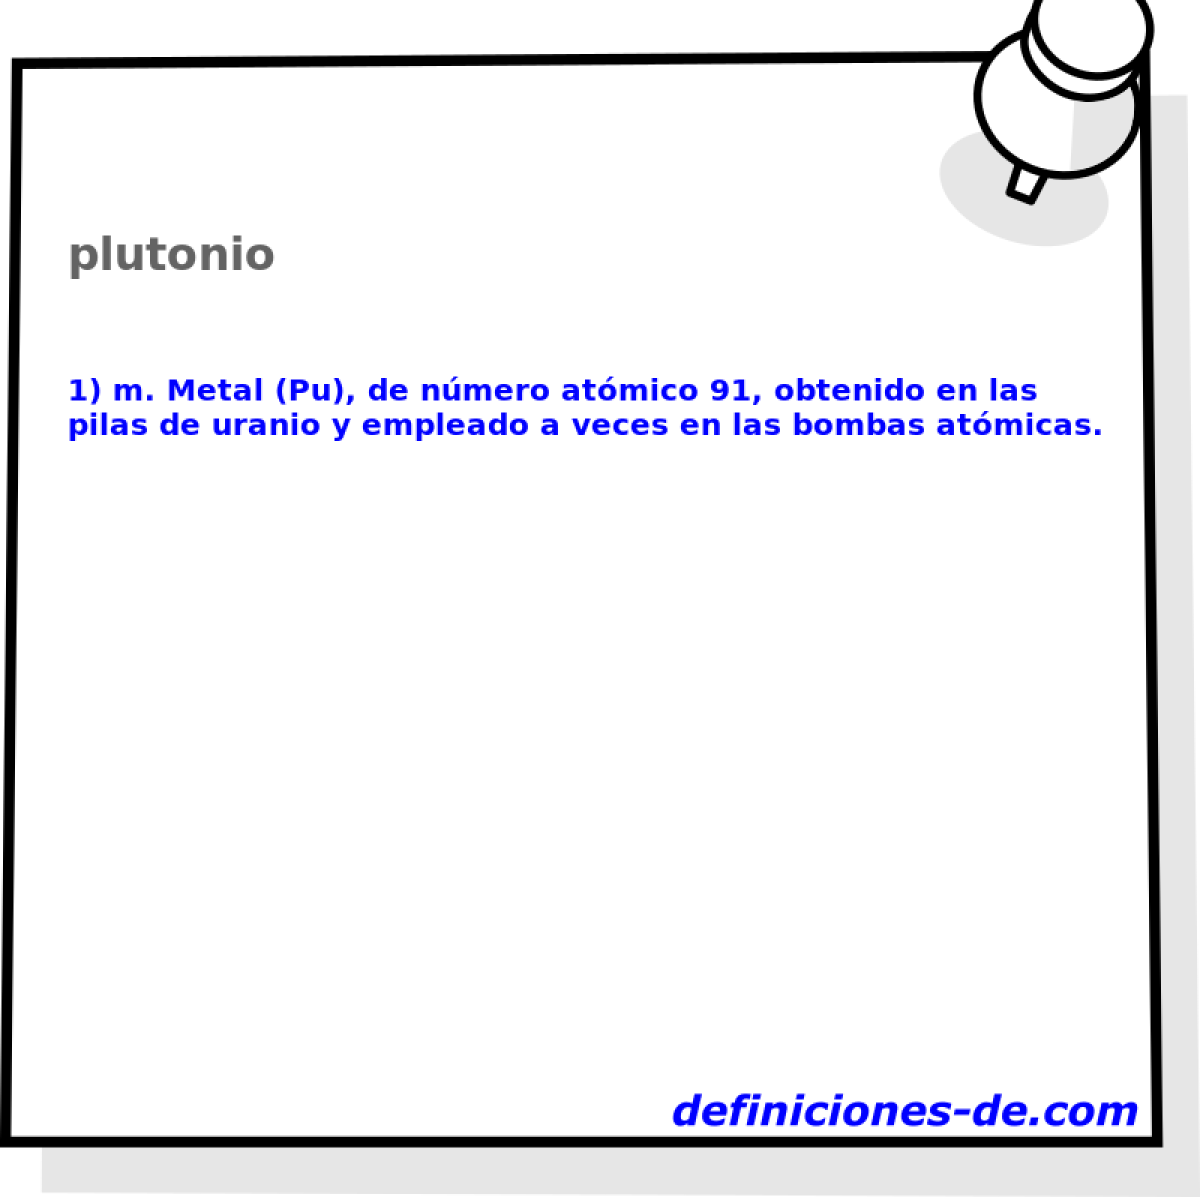 plutonio 